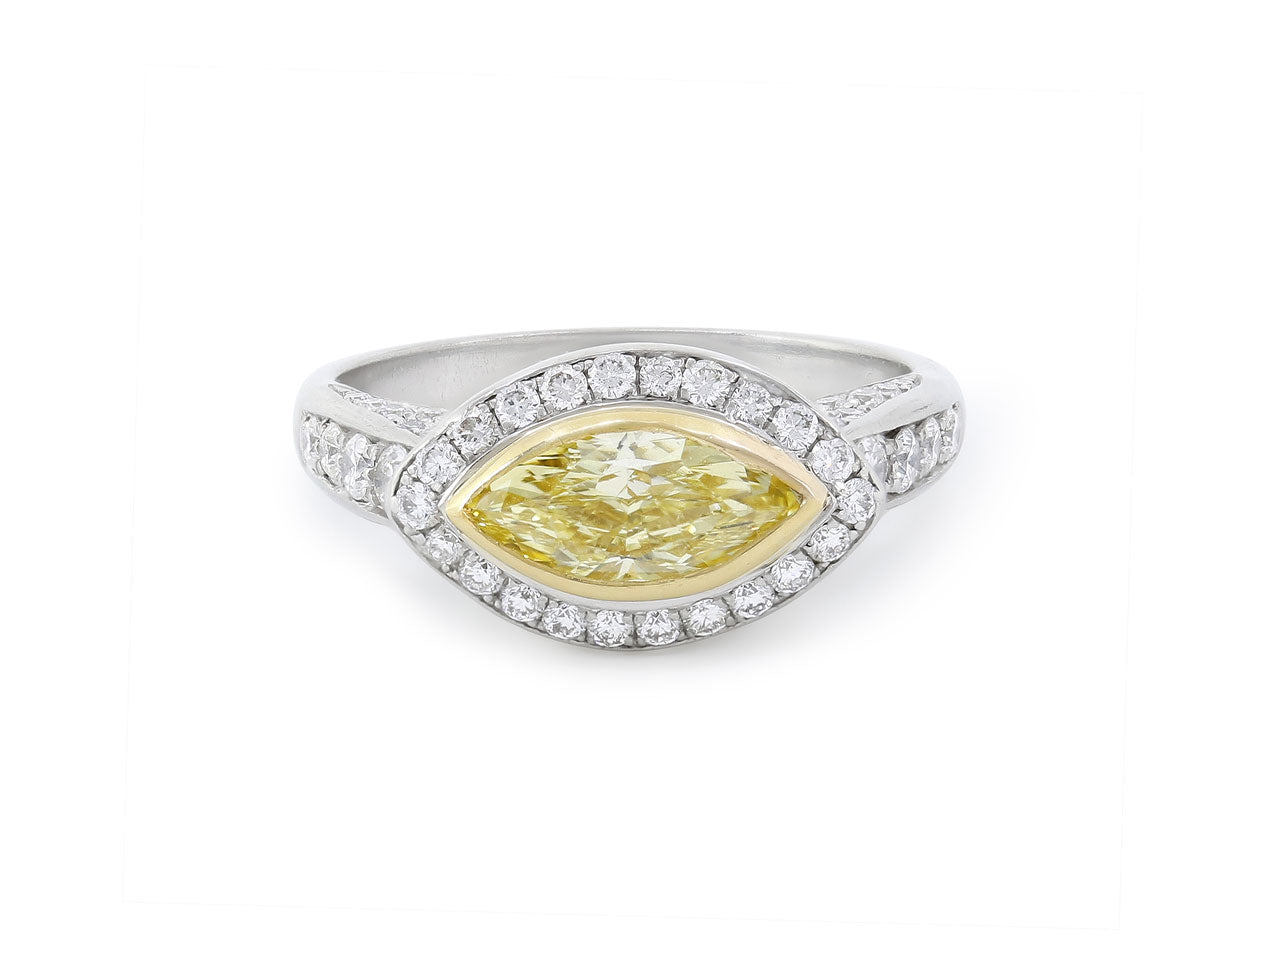 Fancy Yellow Marquise Diamond Ring in Platinum